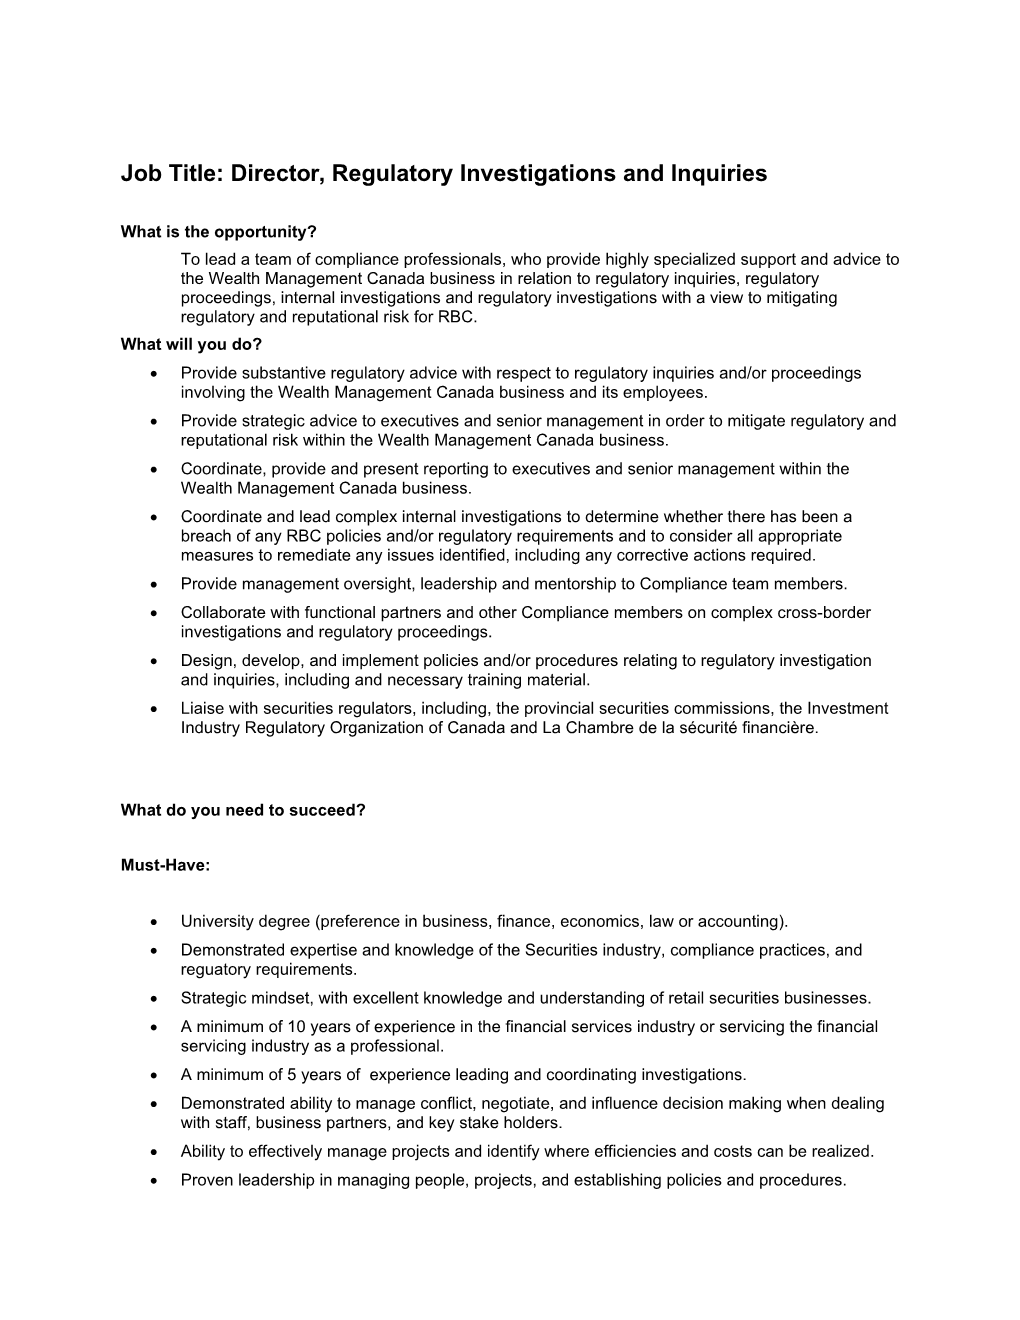 Job Title:Director, Regulatory Investigations and Inquiries